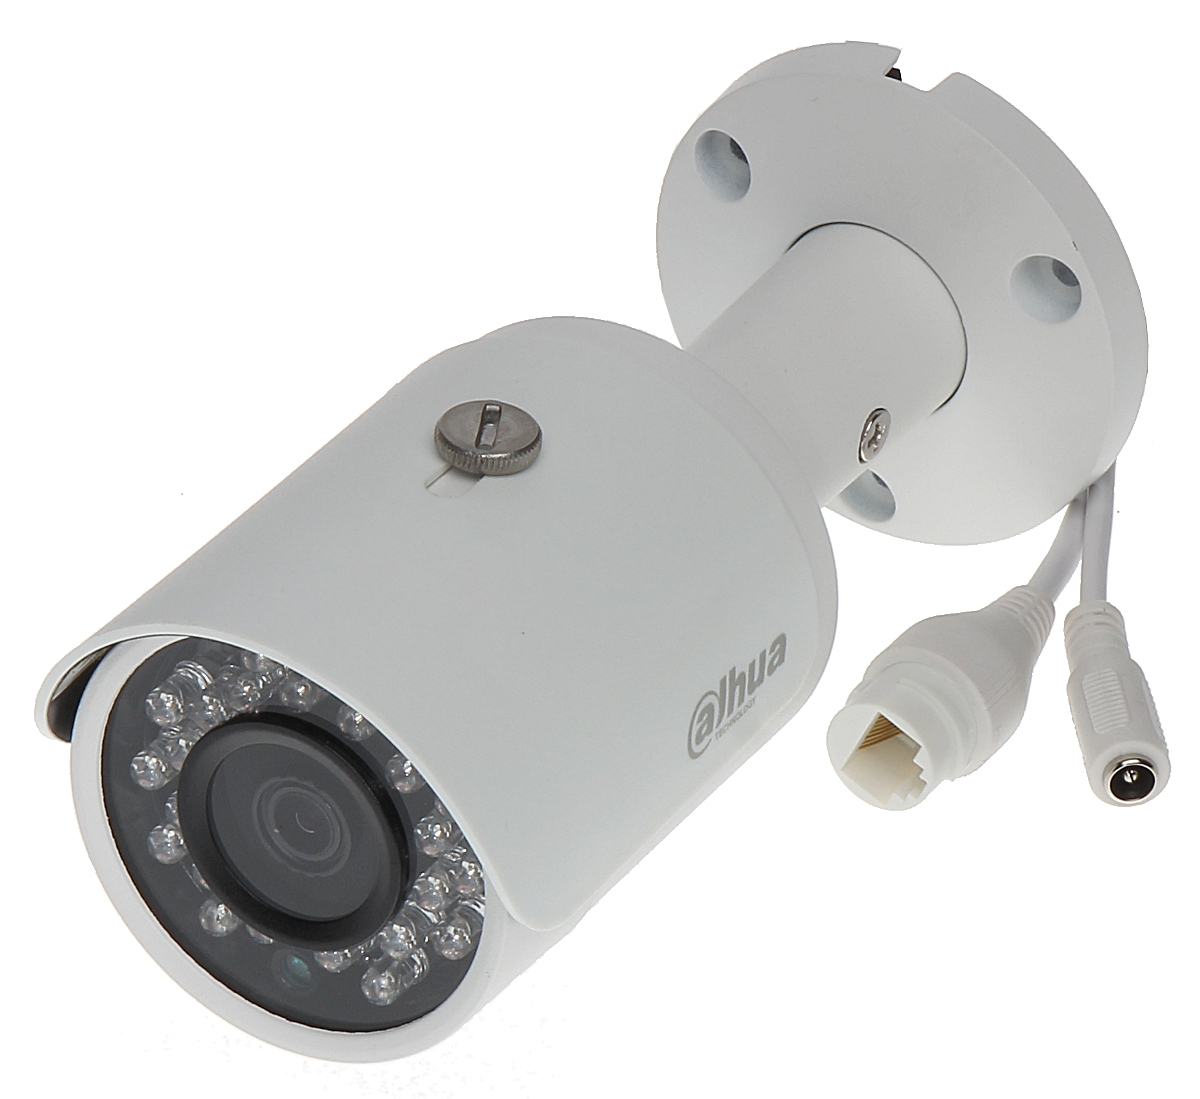 IP-KAMERA DH-IPC-HFW1320SP -0360B 3.0 Mpx 3.6 mm DAHUA - IP kamerat  kiinteän polttovälin linsseillä ja infra... - Delta